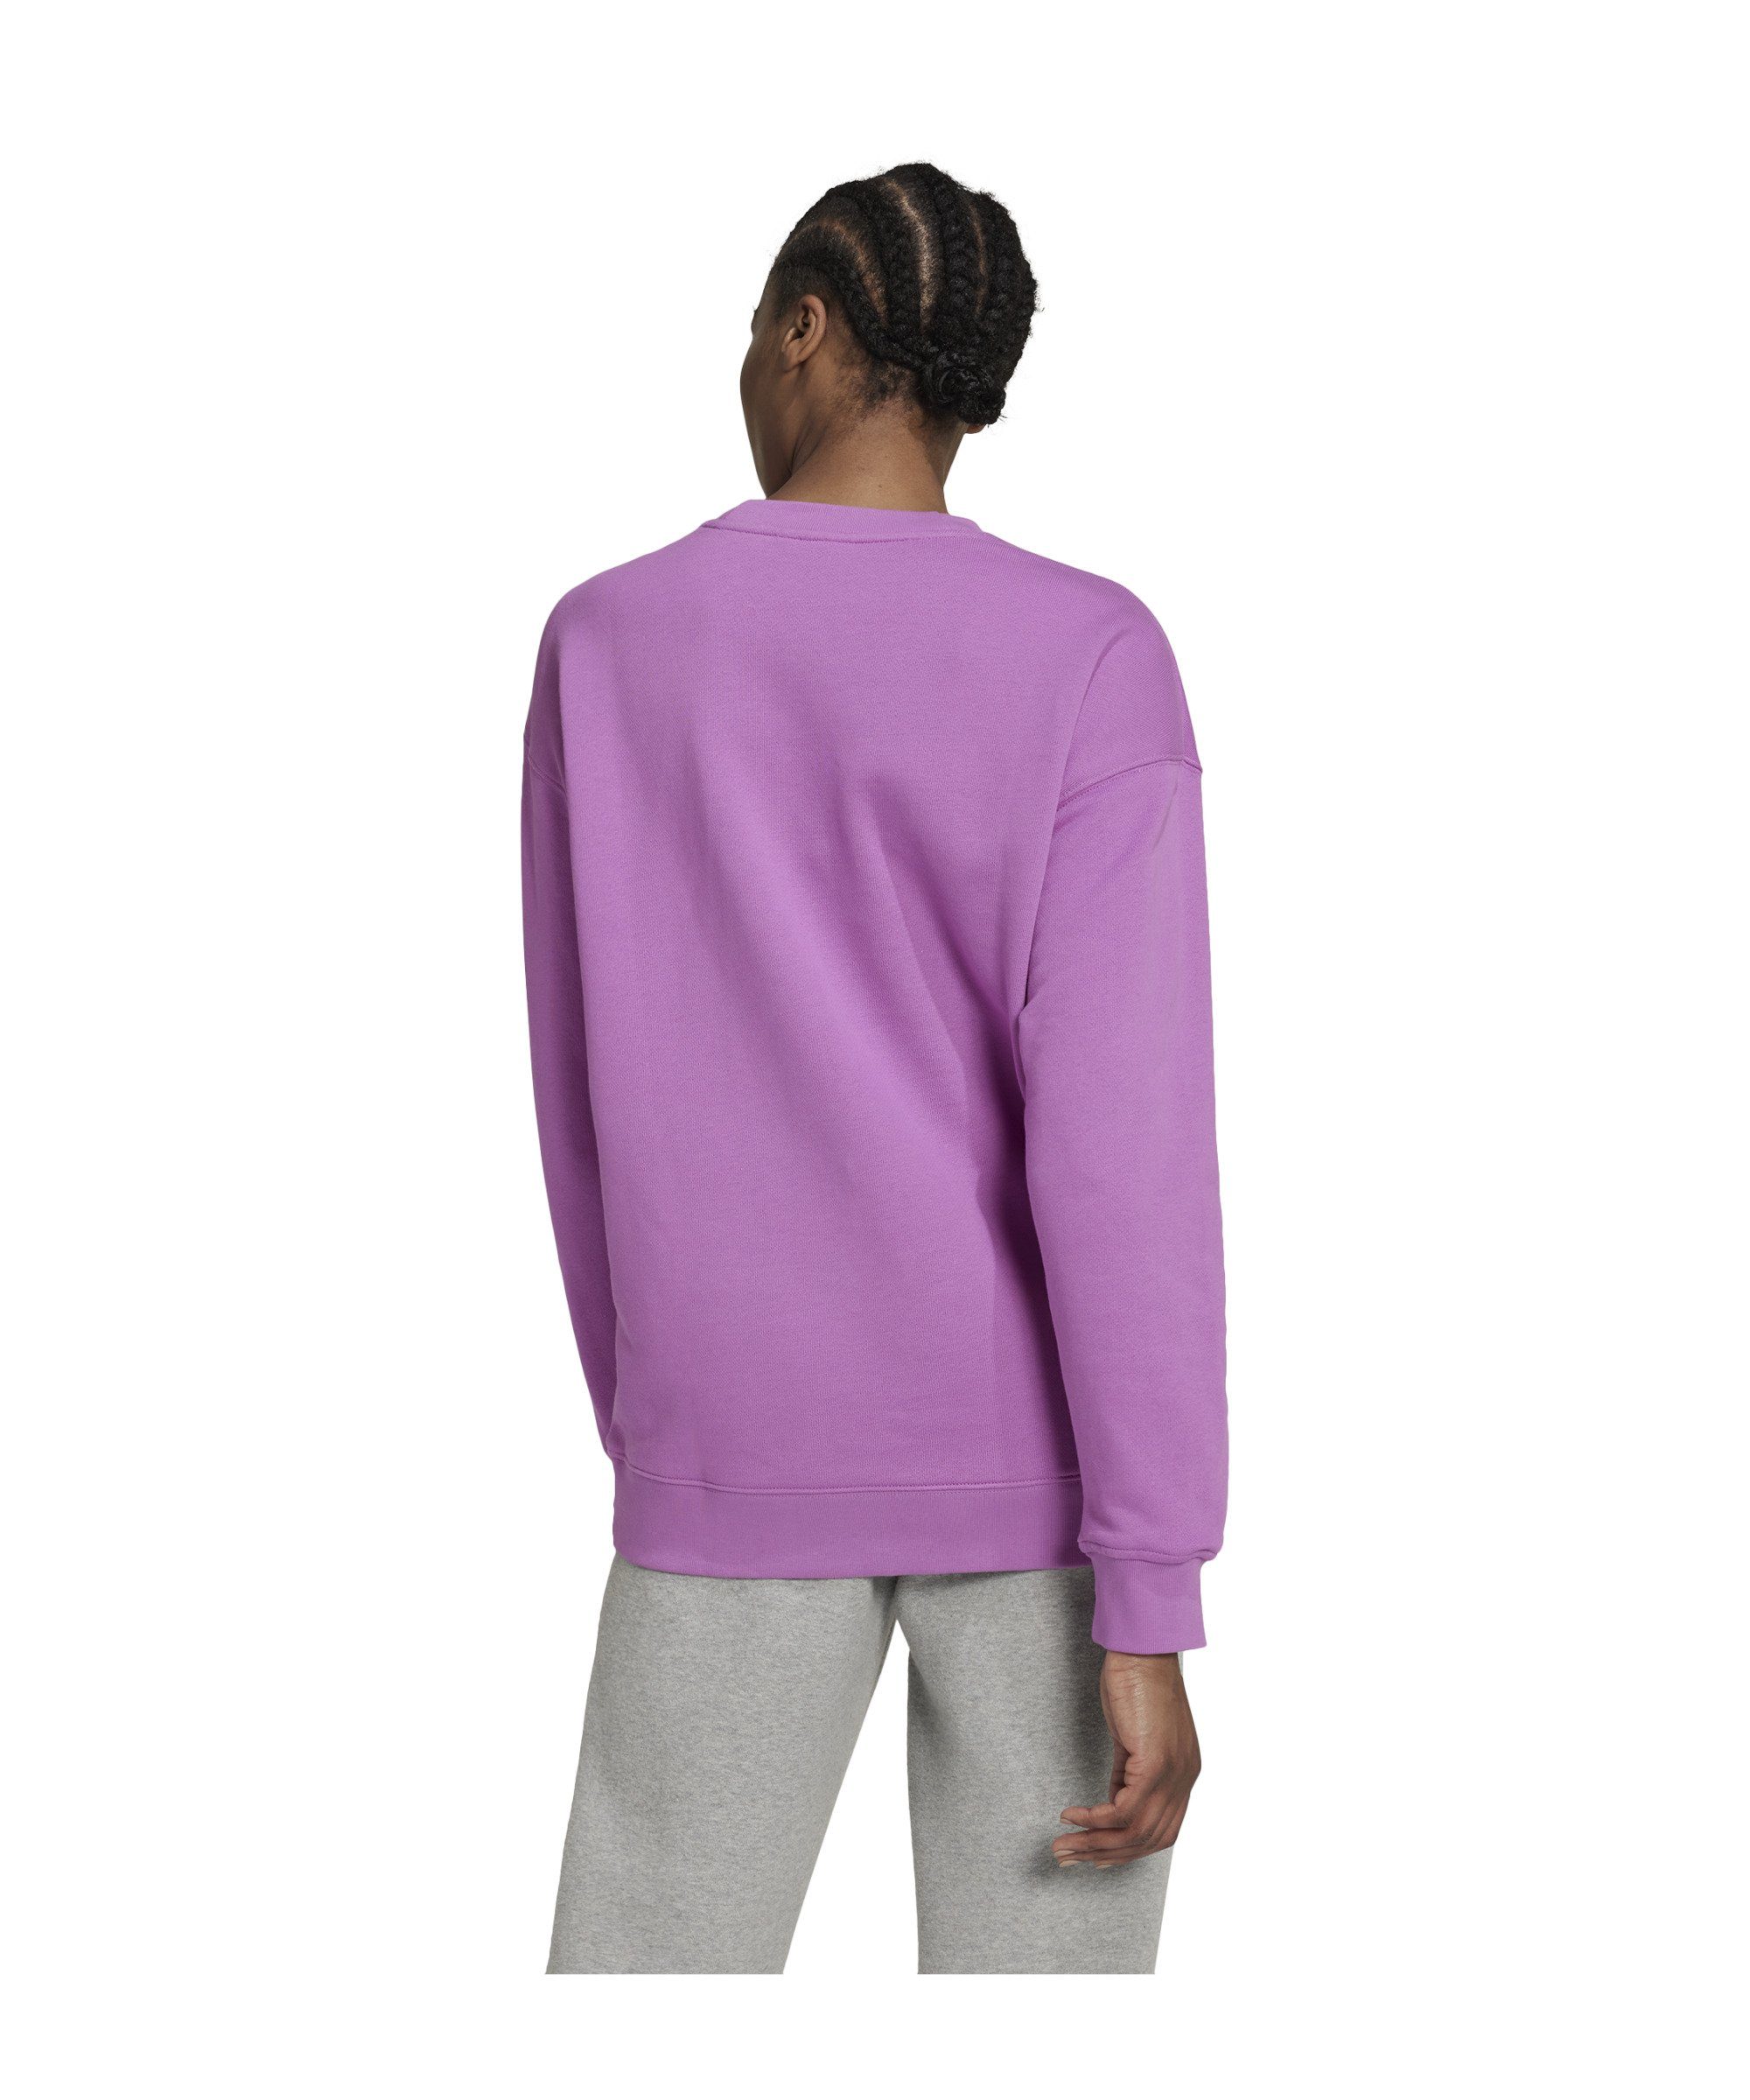 Sweater Trefoil Sweatshirt adidas Damen lila Originals